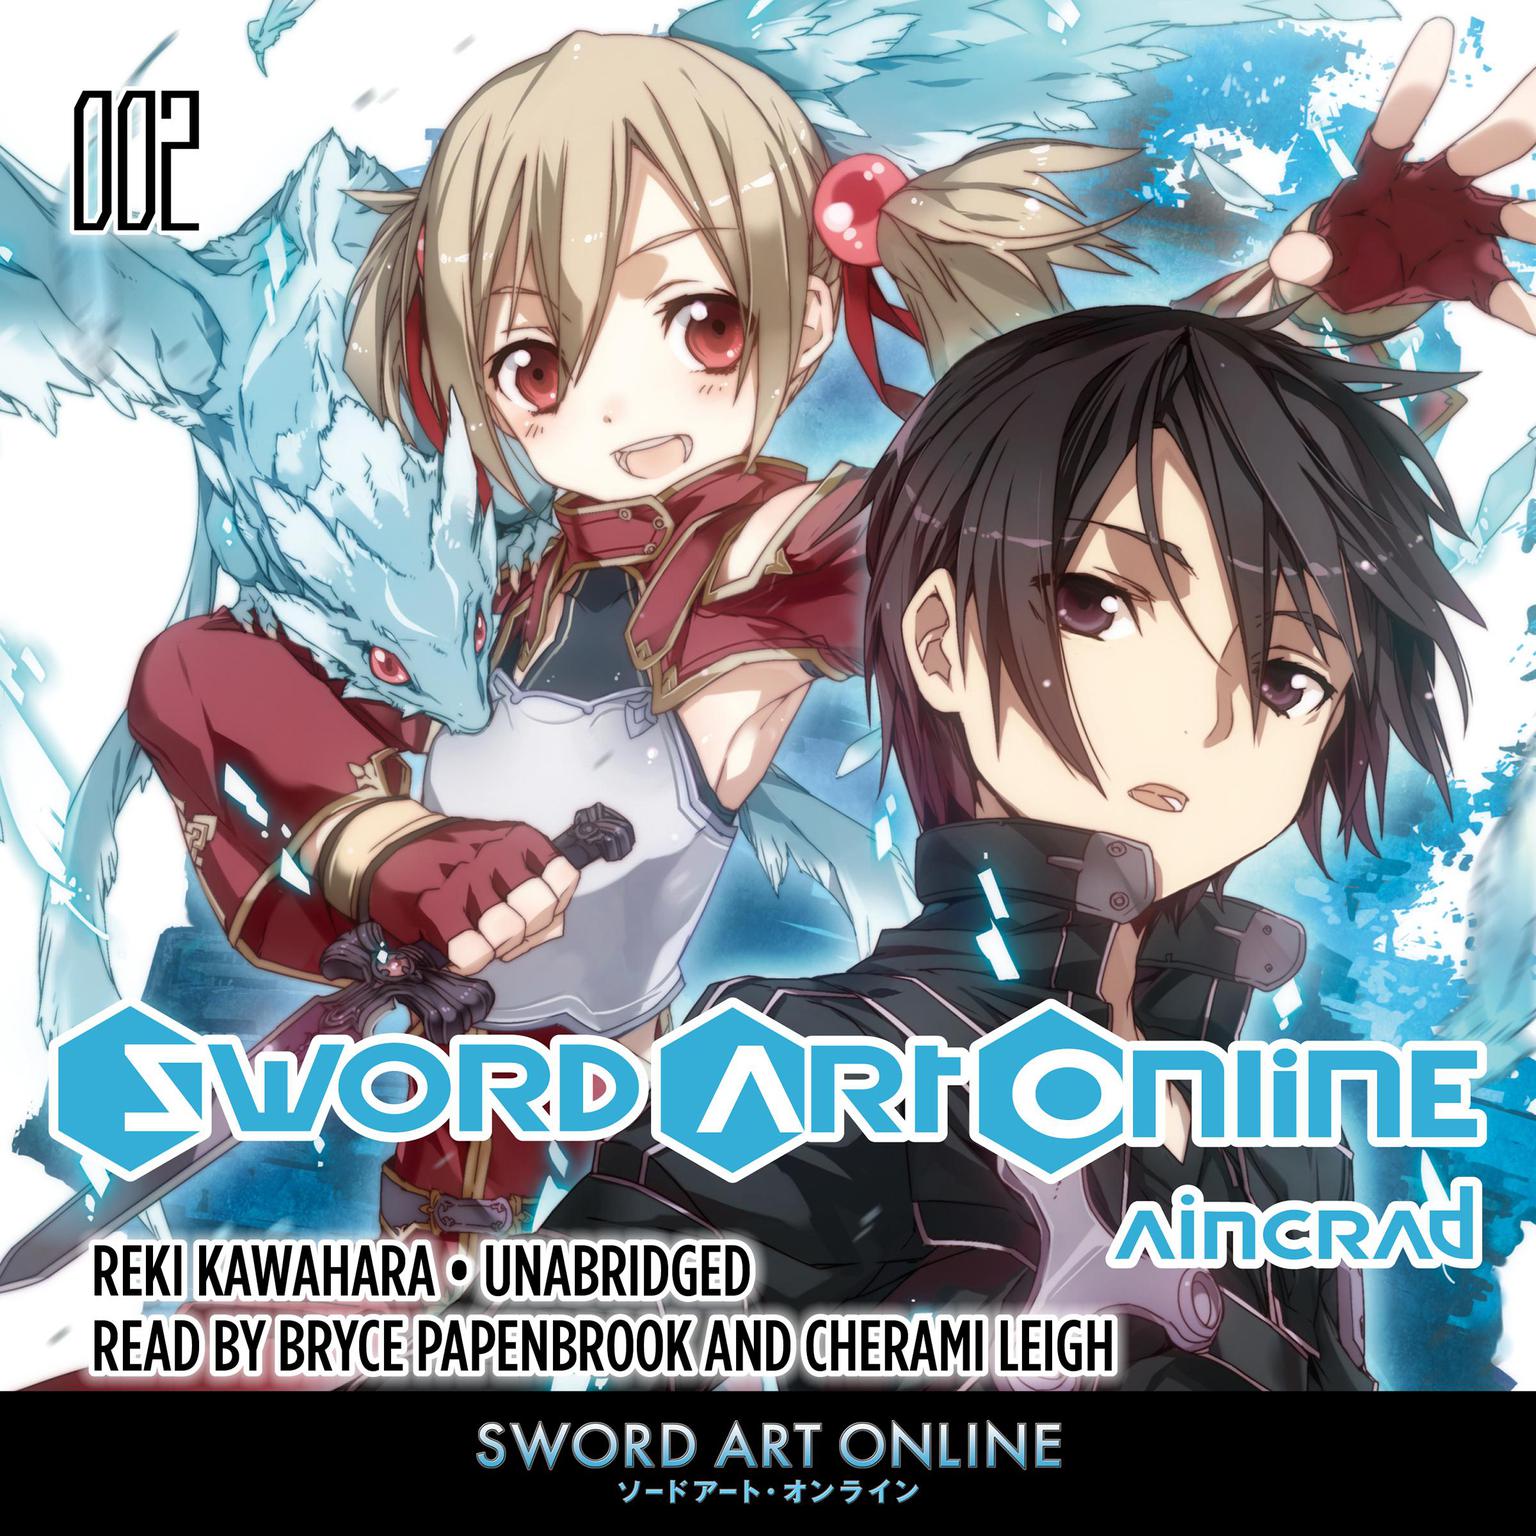 Sword Art Online 2: Aincrad (light novel) Audiobook, by Reki Kawahara